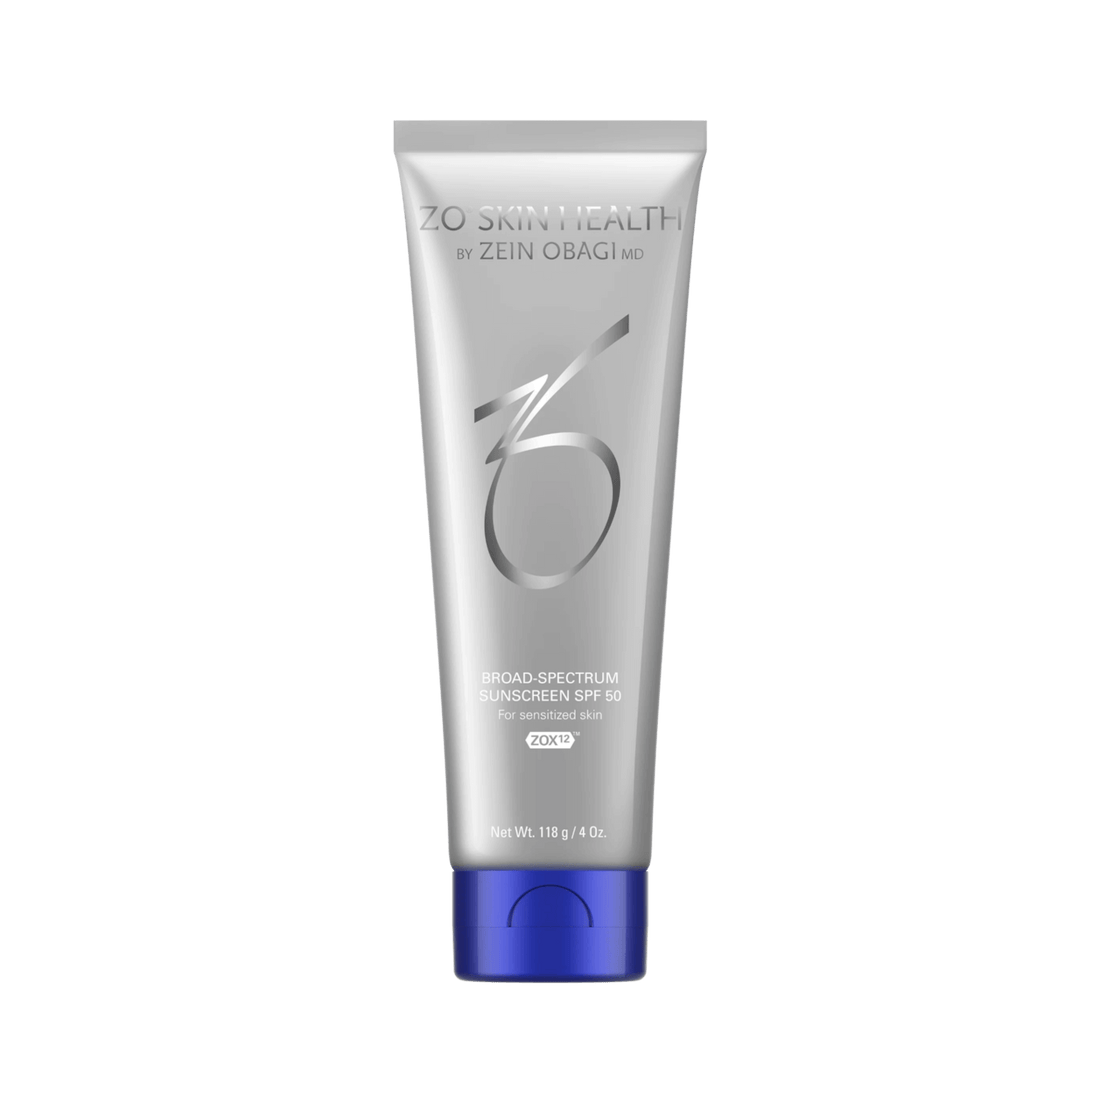 ZO Skin Health Broad Spectrum Sunscreen SPF 50